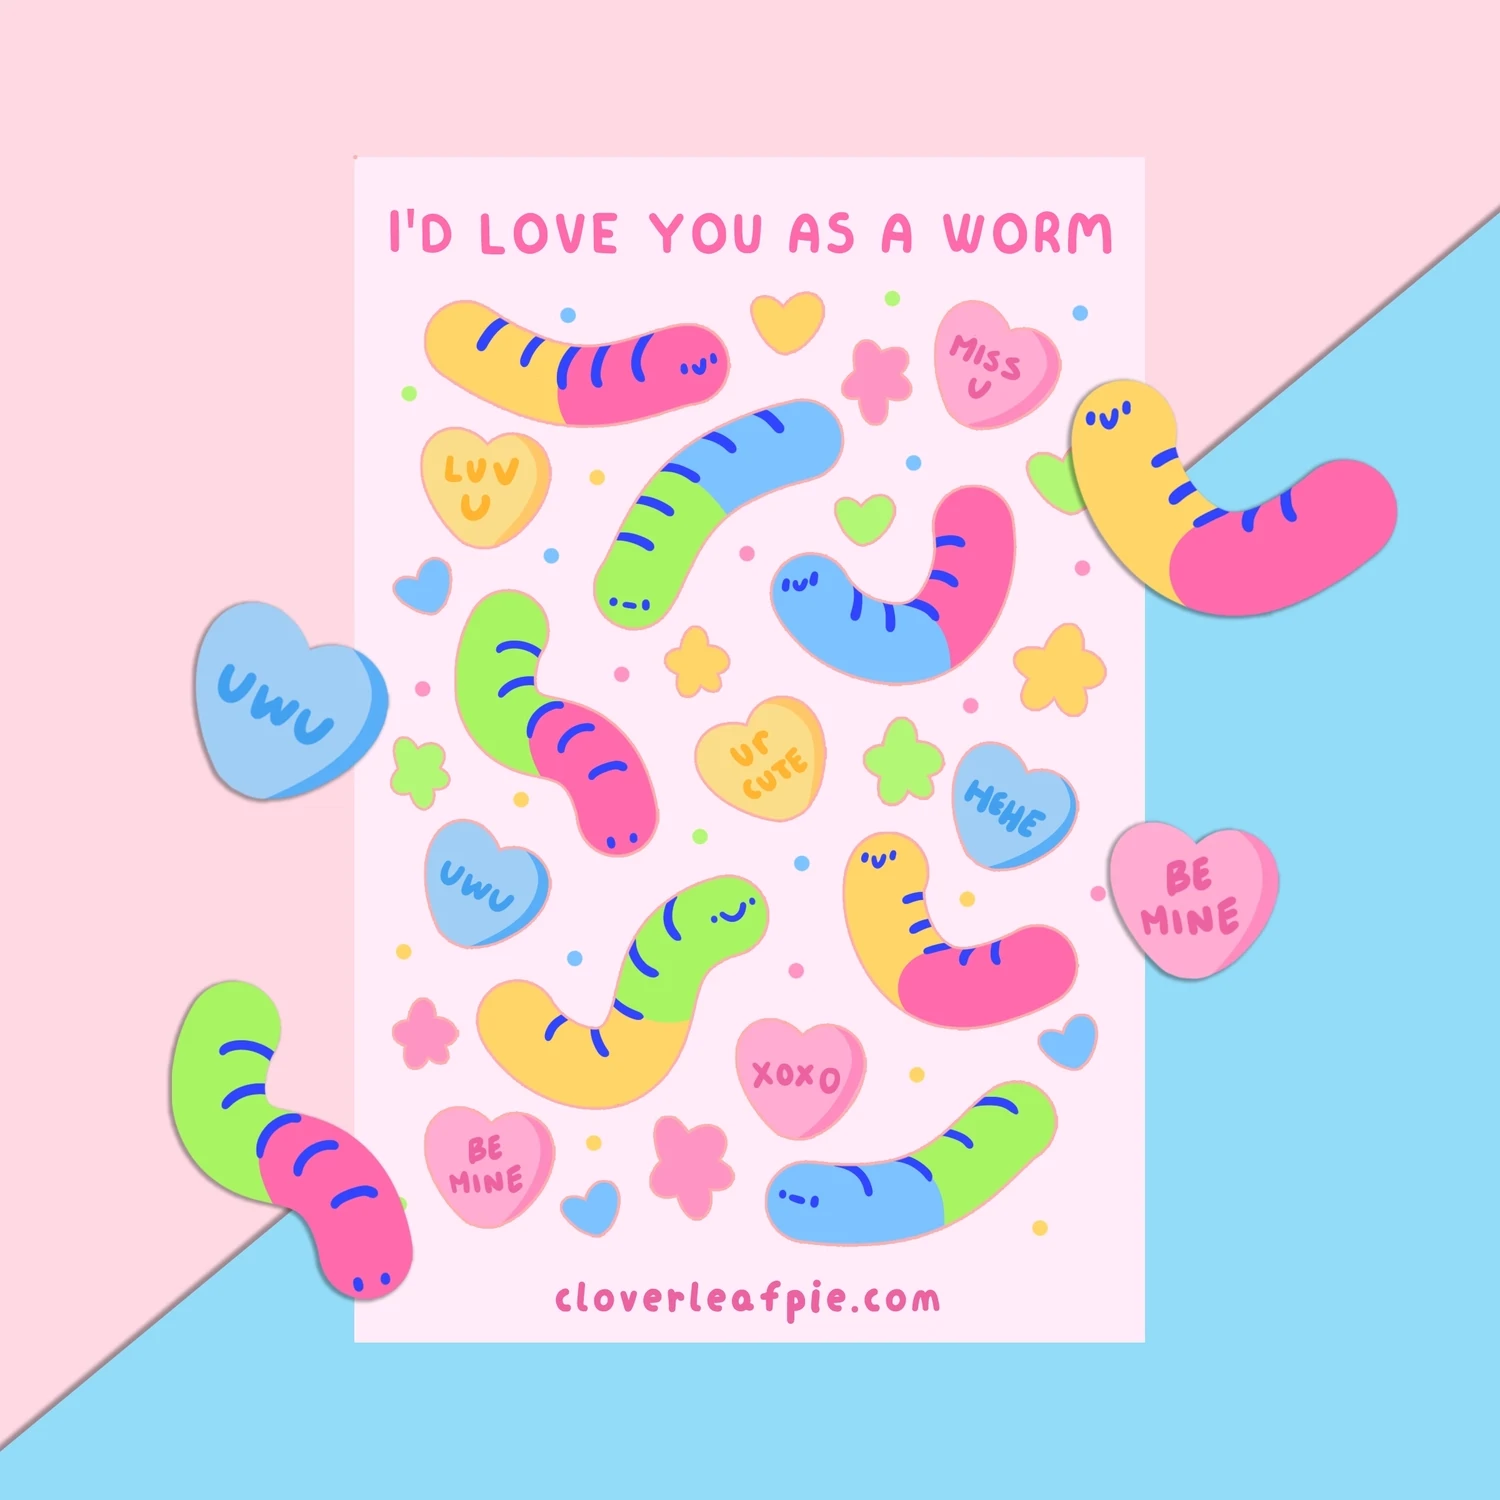 Worm Sticker Sheet